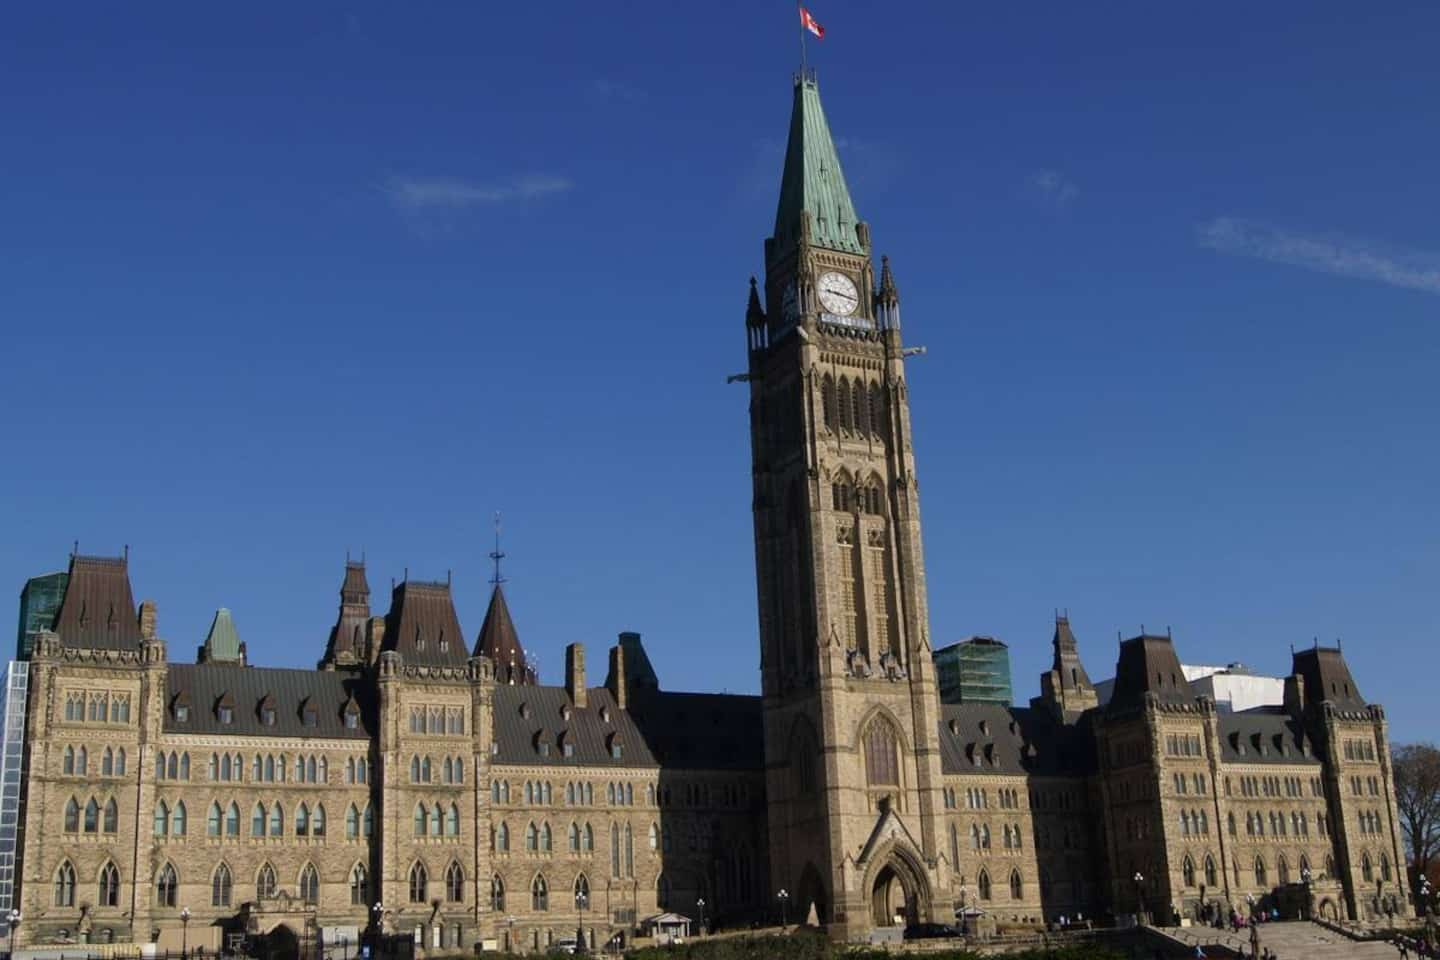 Ottawa: Police Operation in Parliament